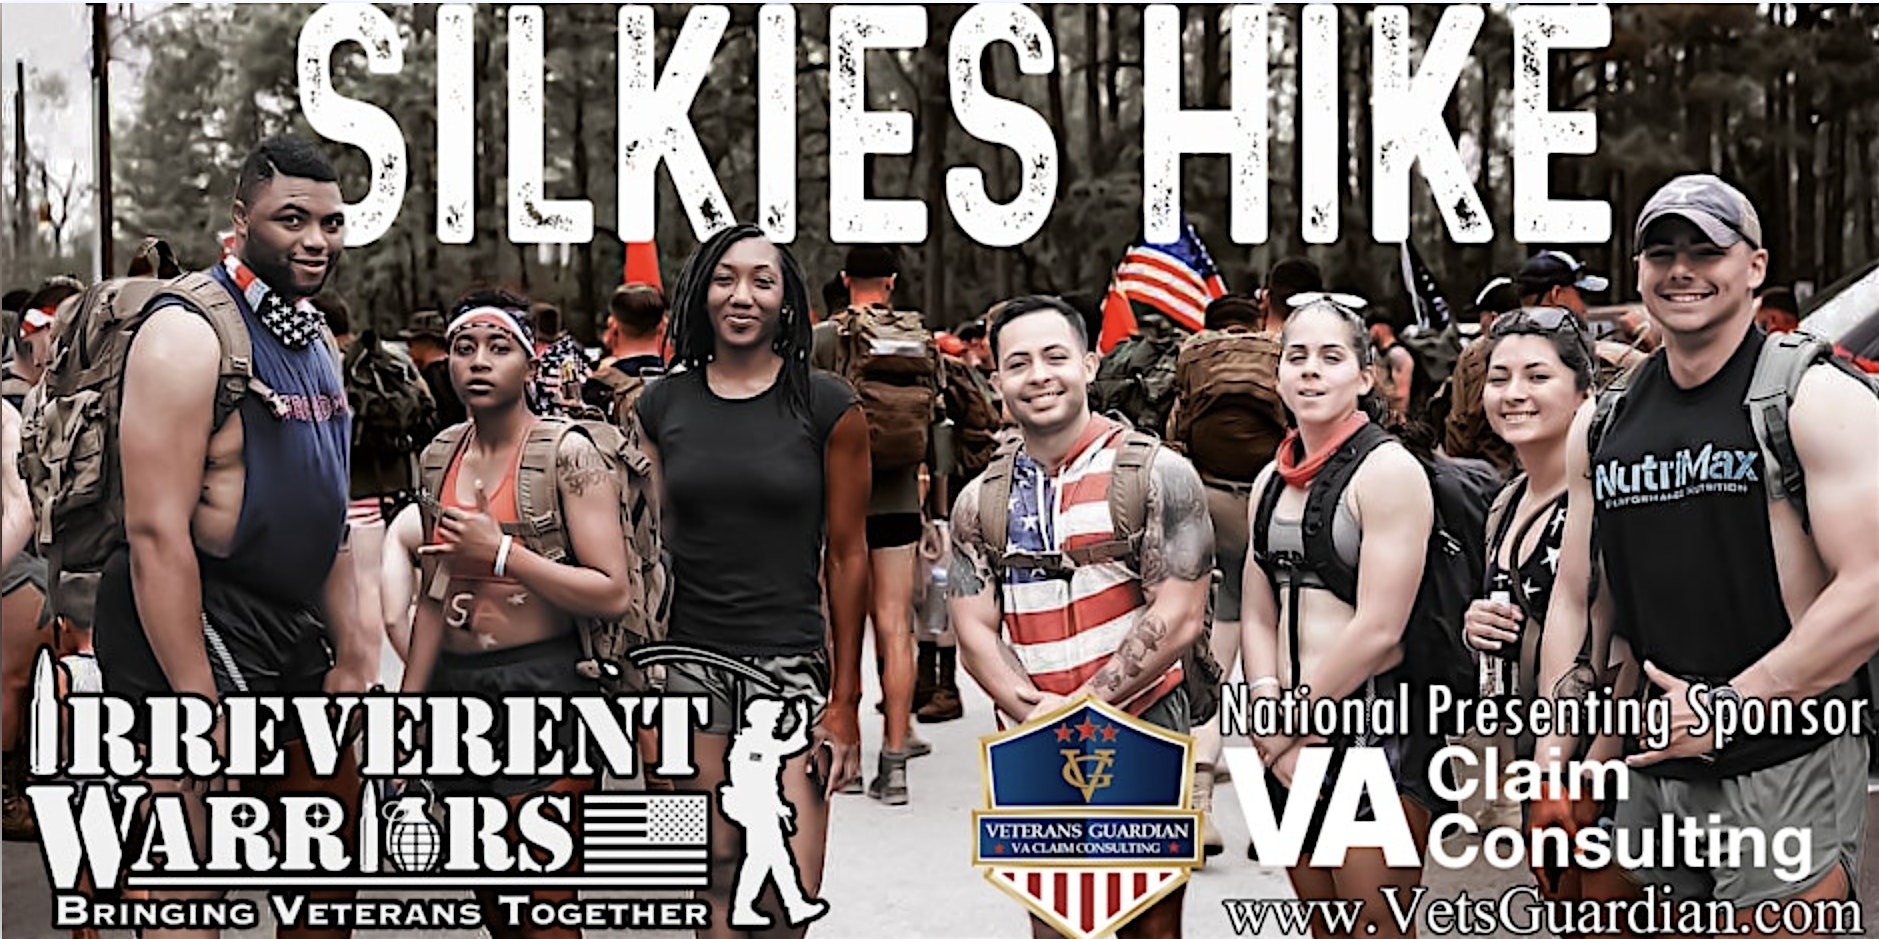 Irreverent Warriors Silkies Hike - Houston, TX